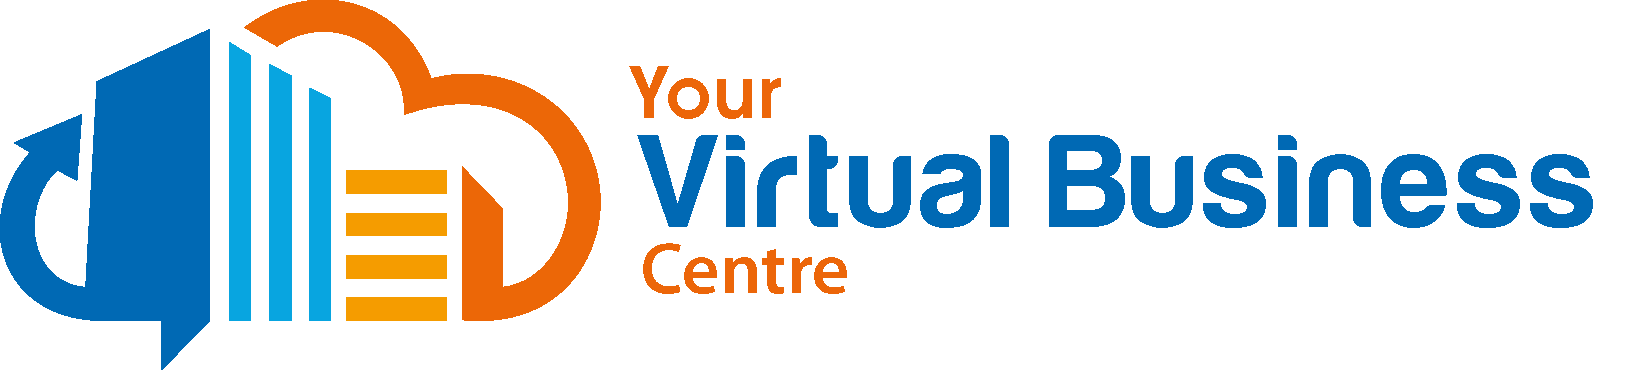 Your Virtual Business Centre WA Pty Ltd